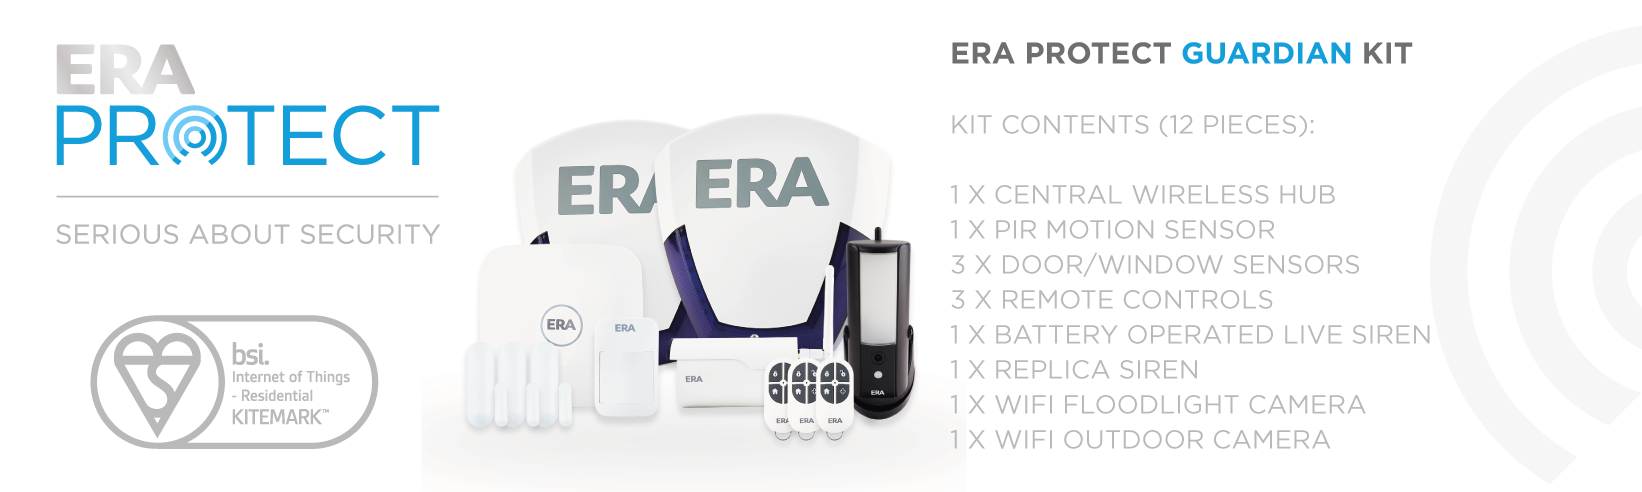 EE-ERA-Protect-Kits-1640x492-Guardian.png